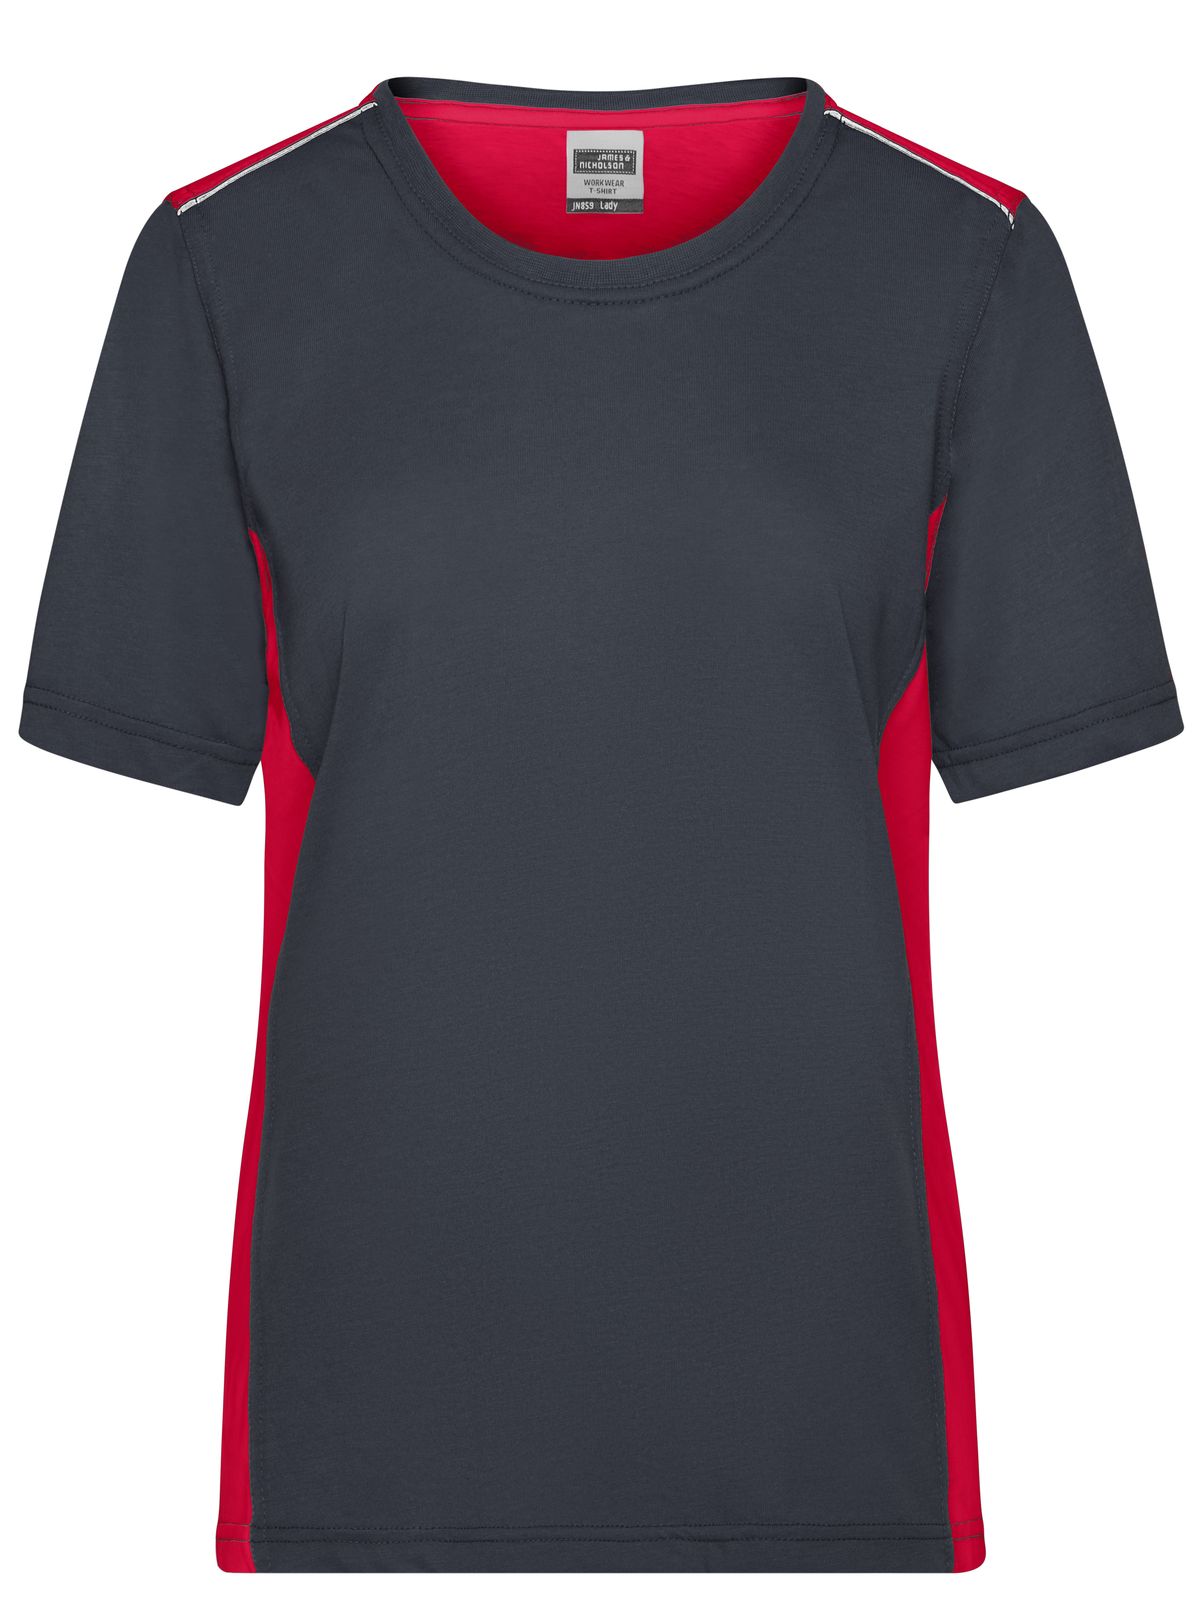 ladies-workwear-t-shirt-color-carbon-red.webp